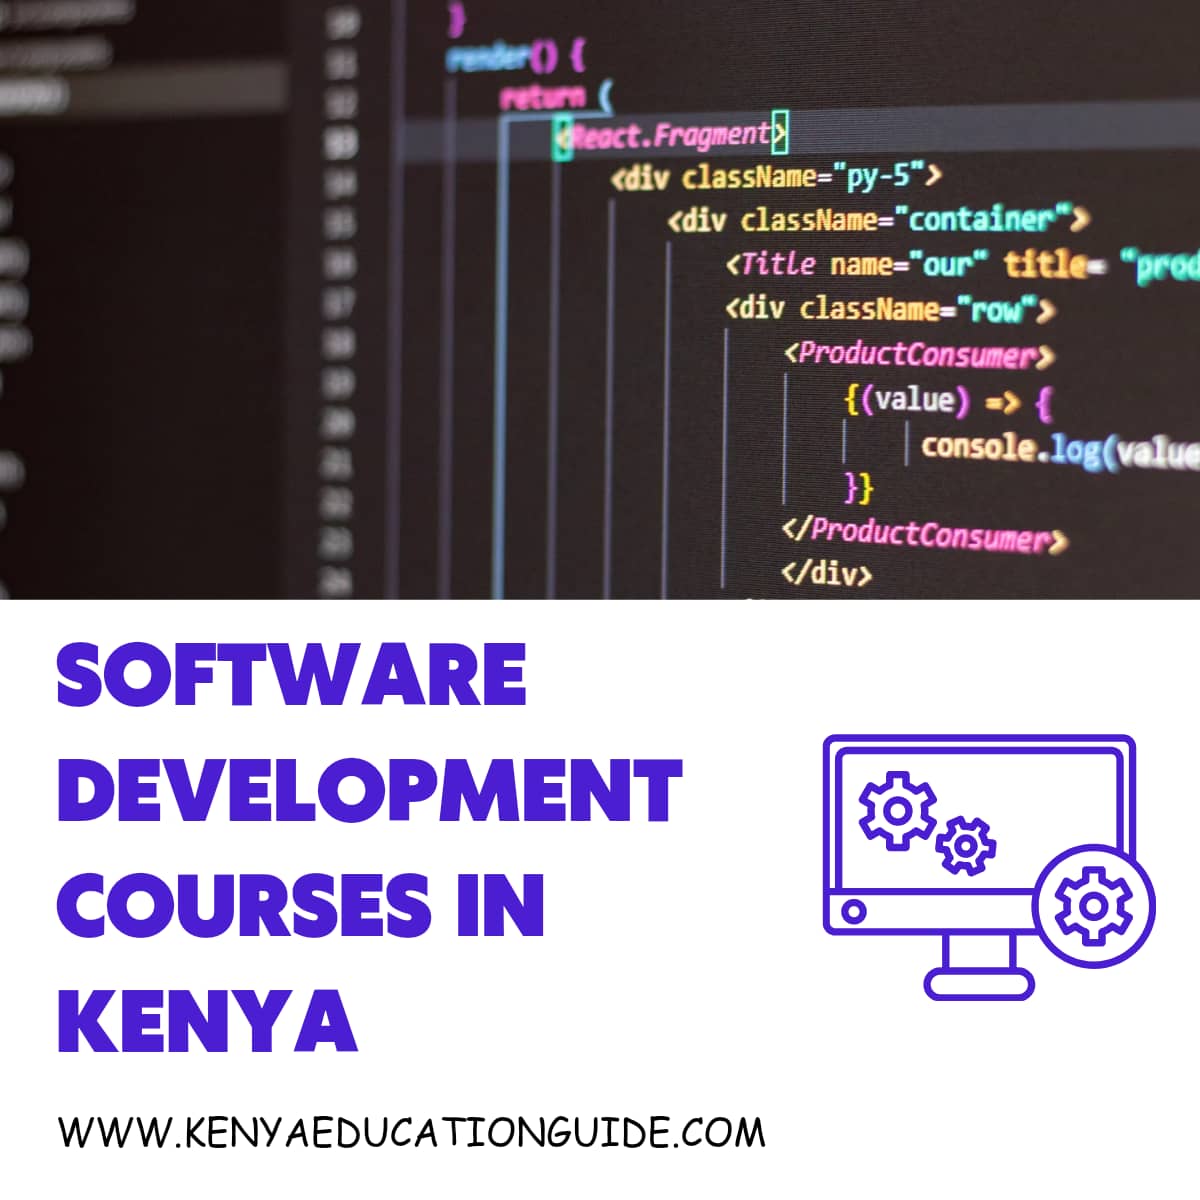 Software development courses in Kenya